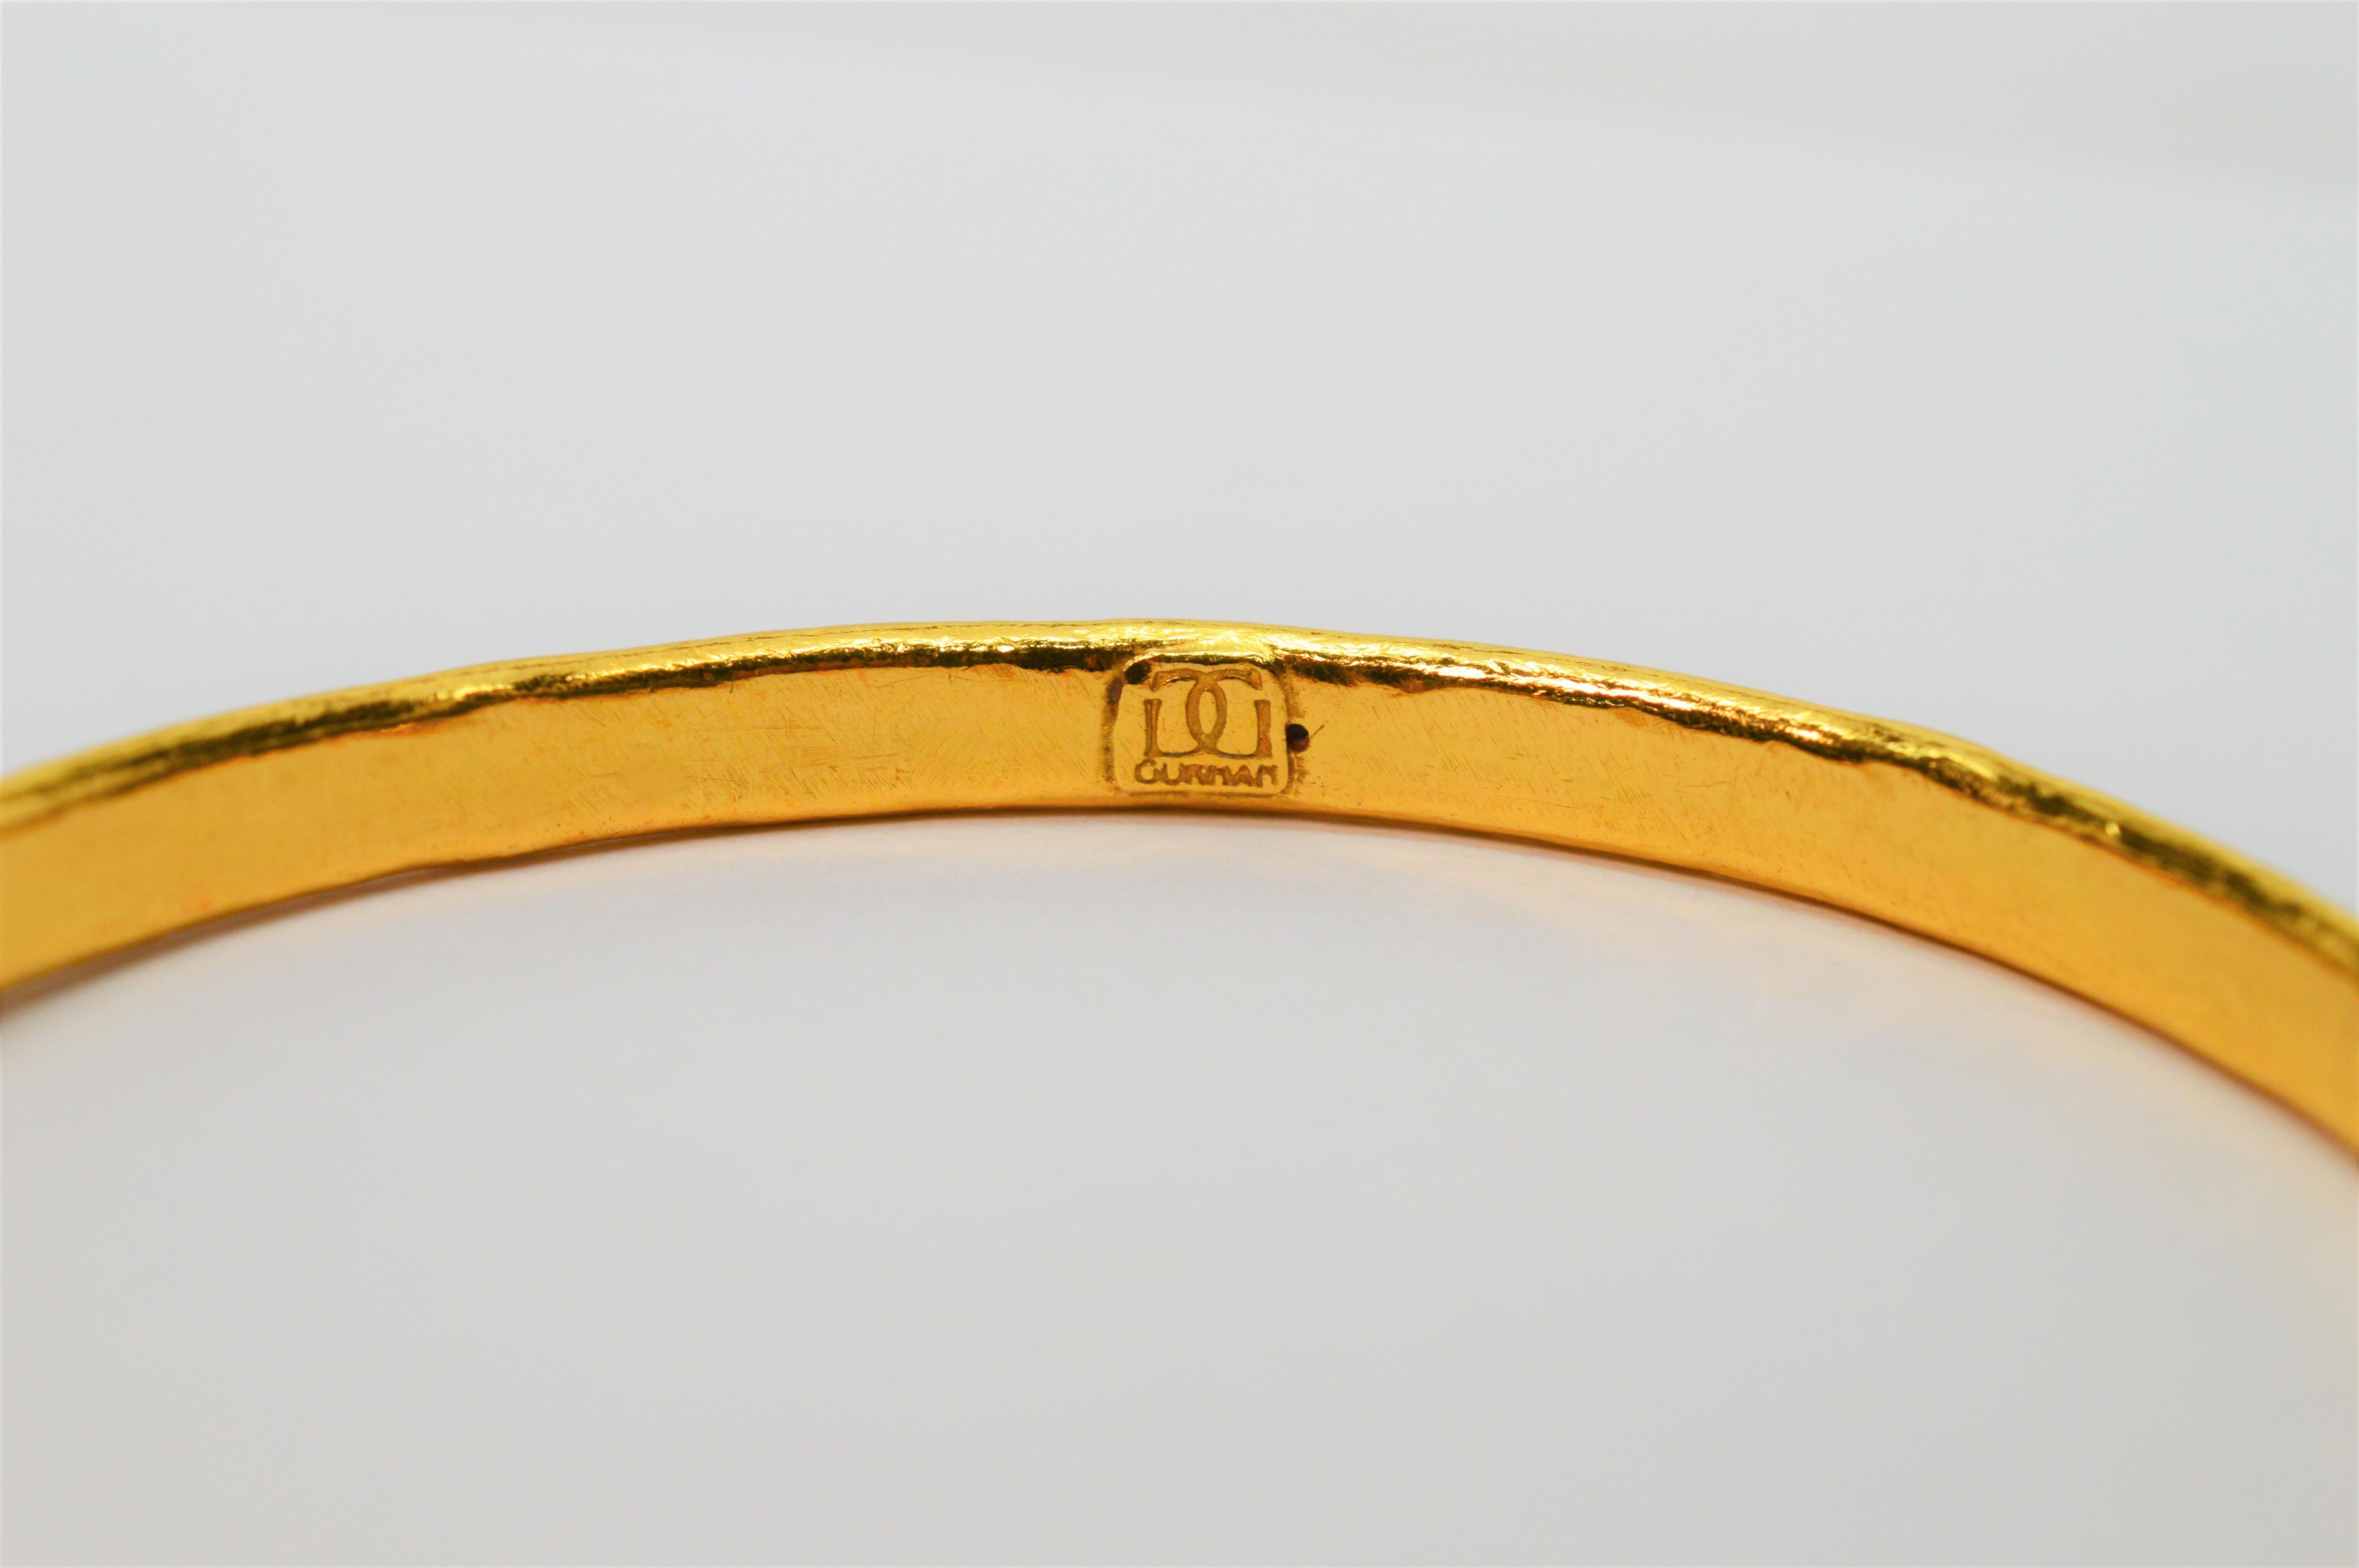 1 oz hammered gold bullion bracelet